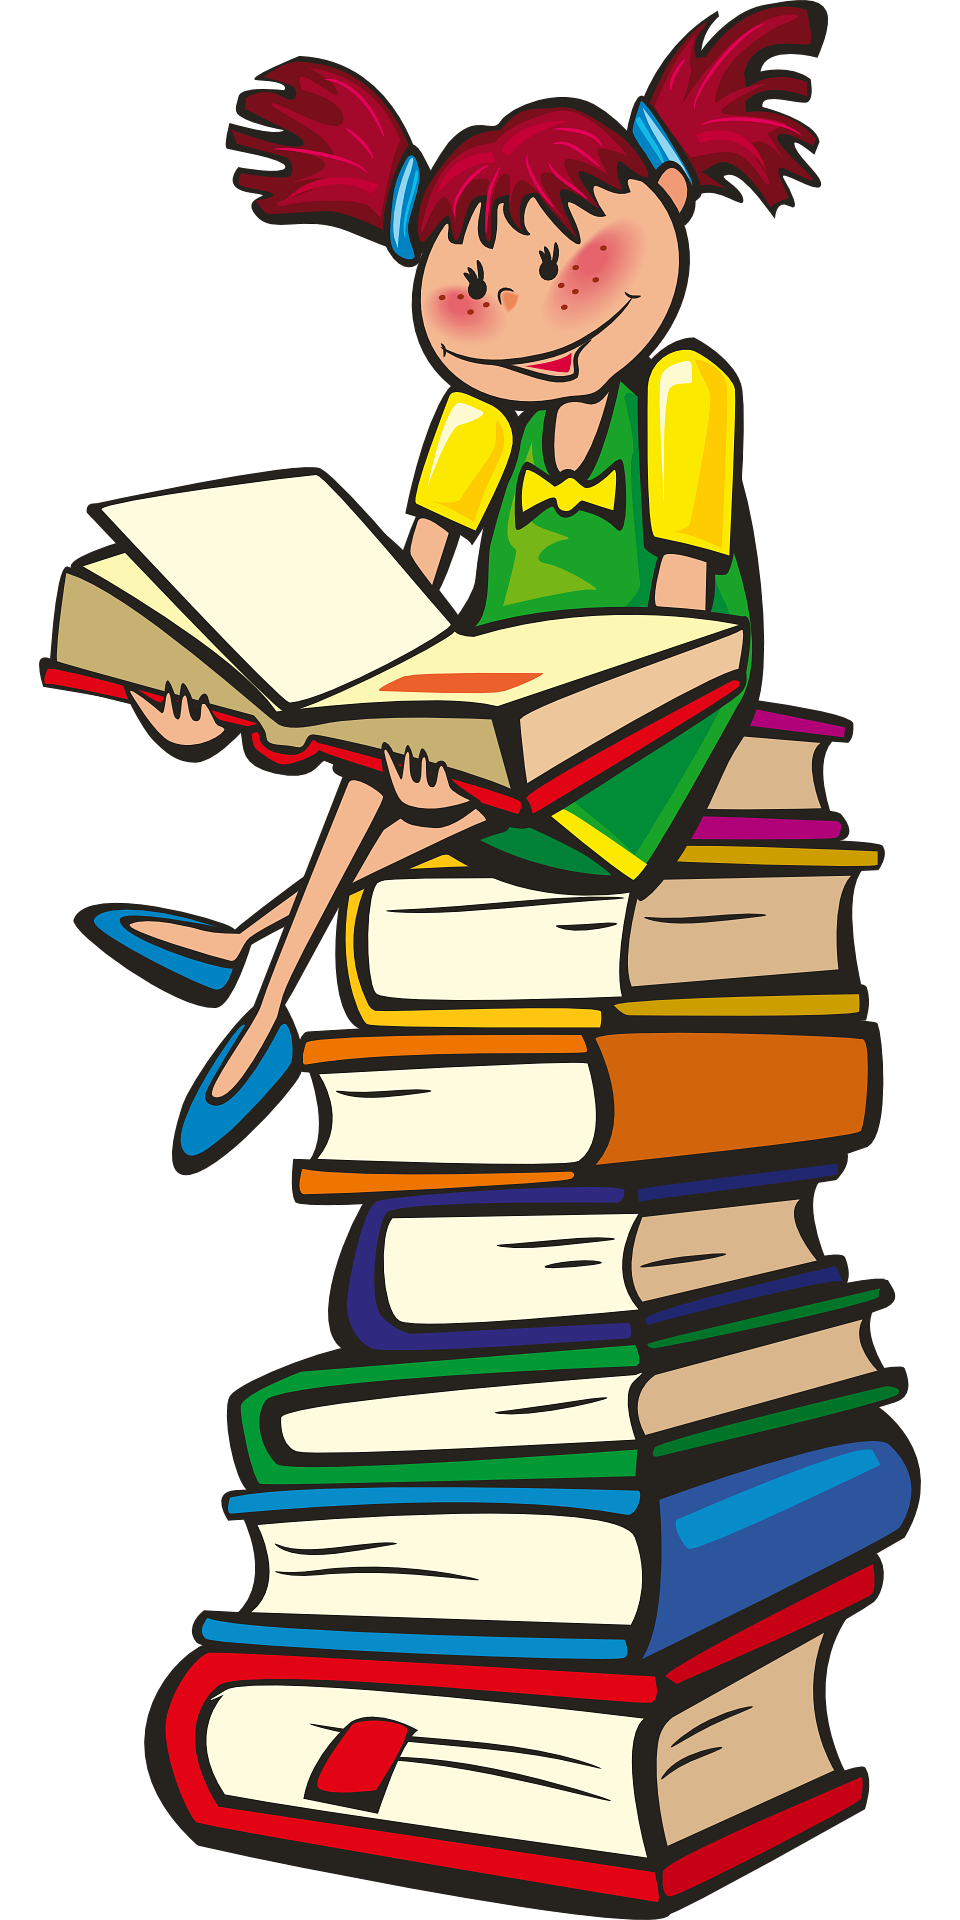 Cartoon girl with books